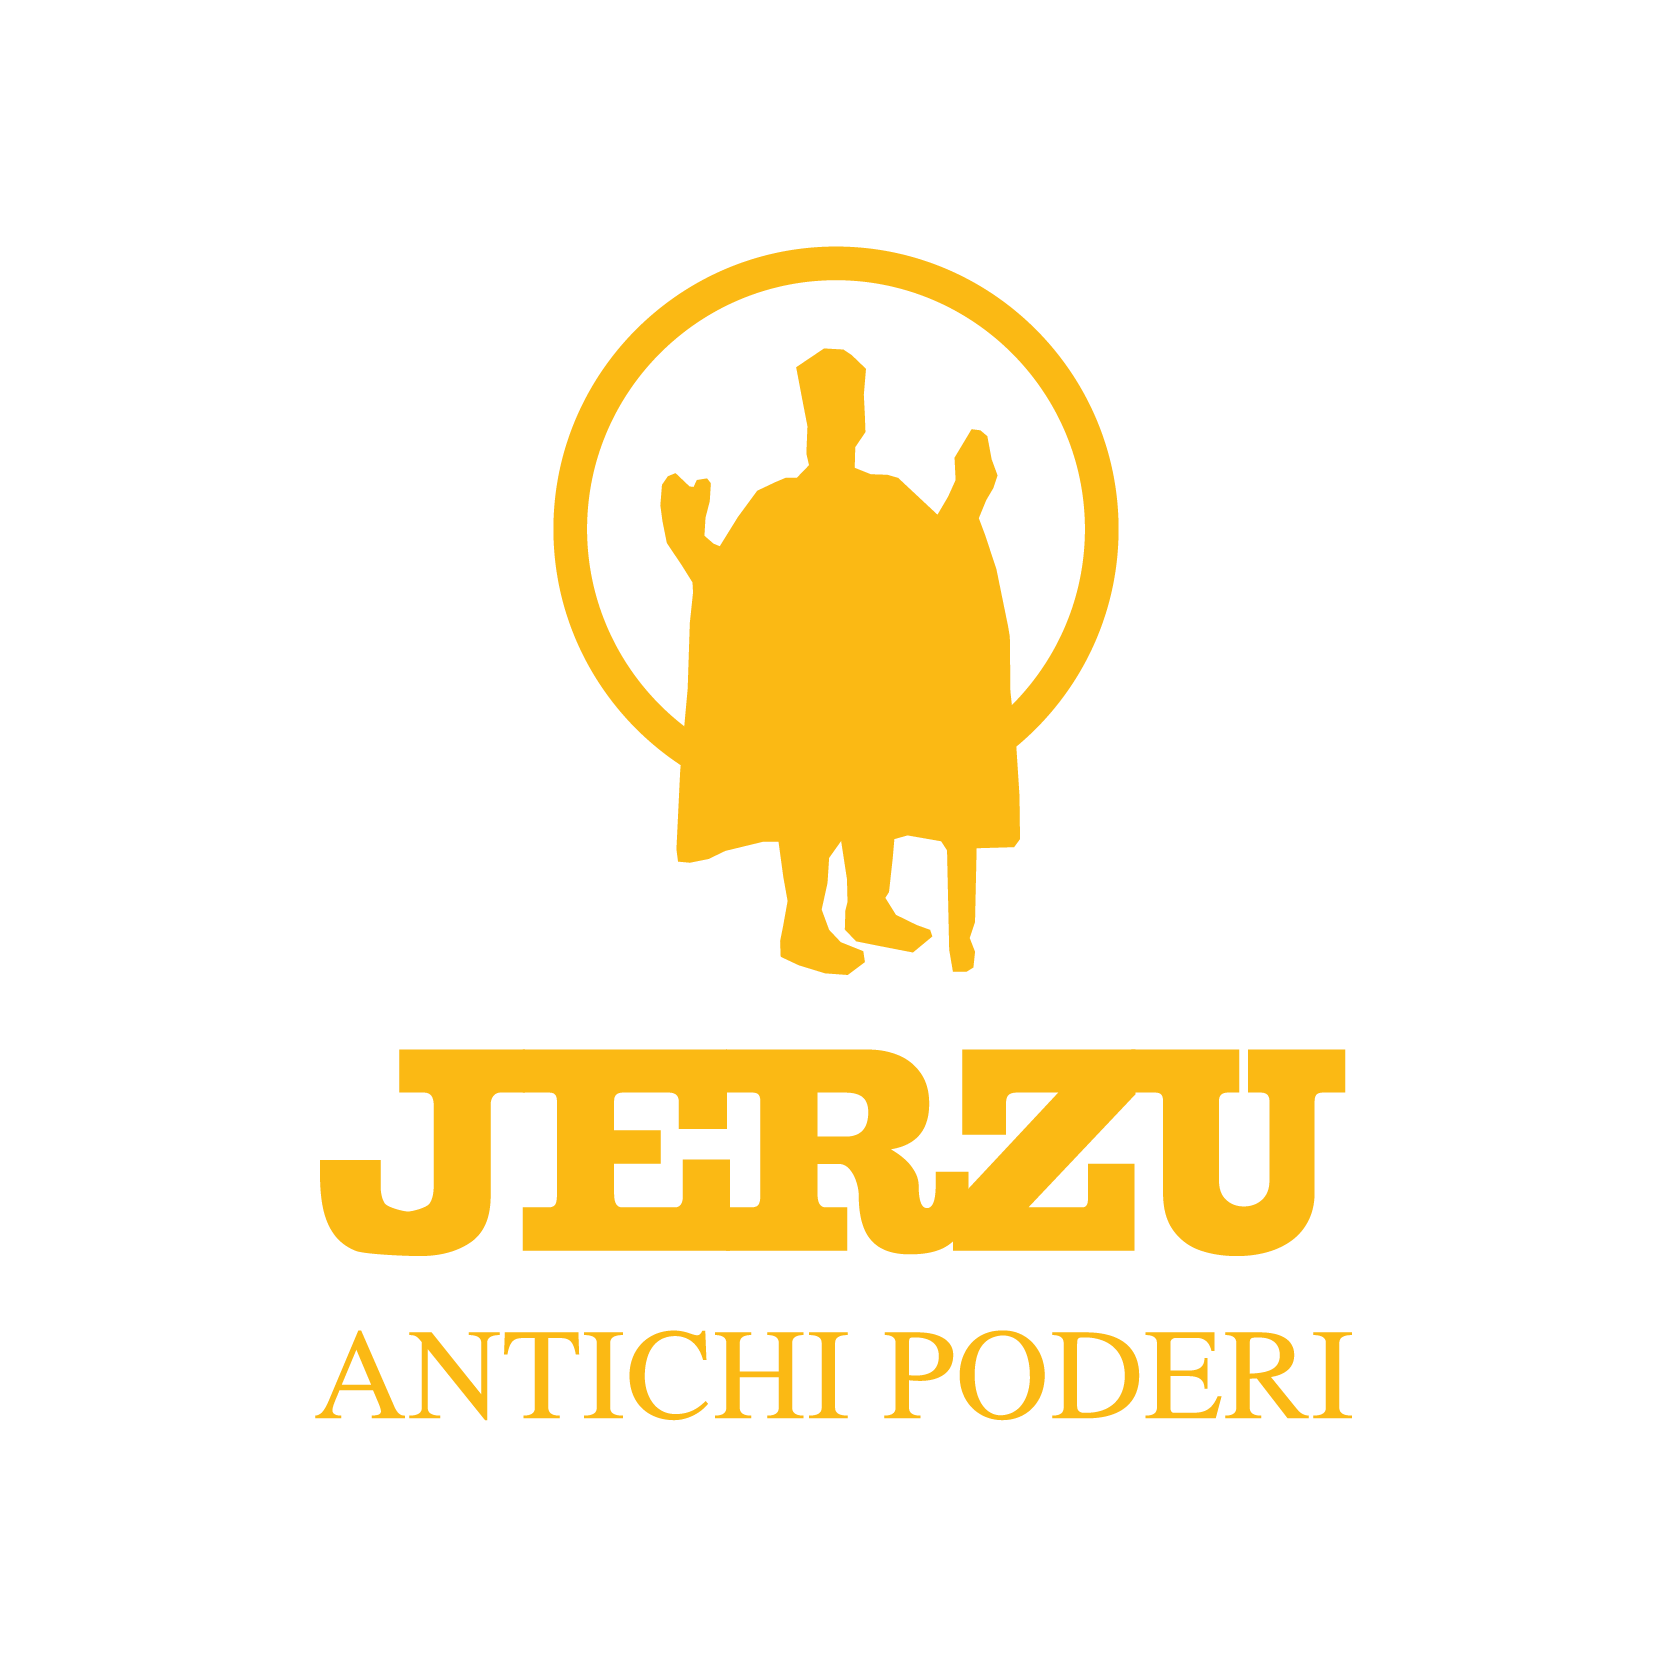 ANTICHI-PODERI-JERZU